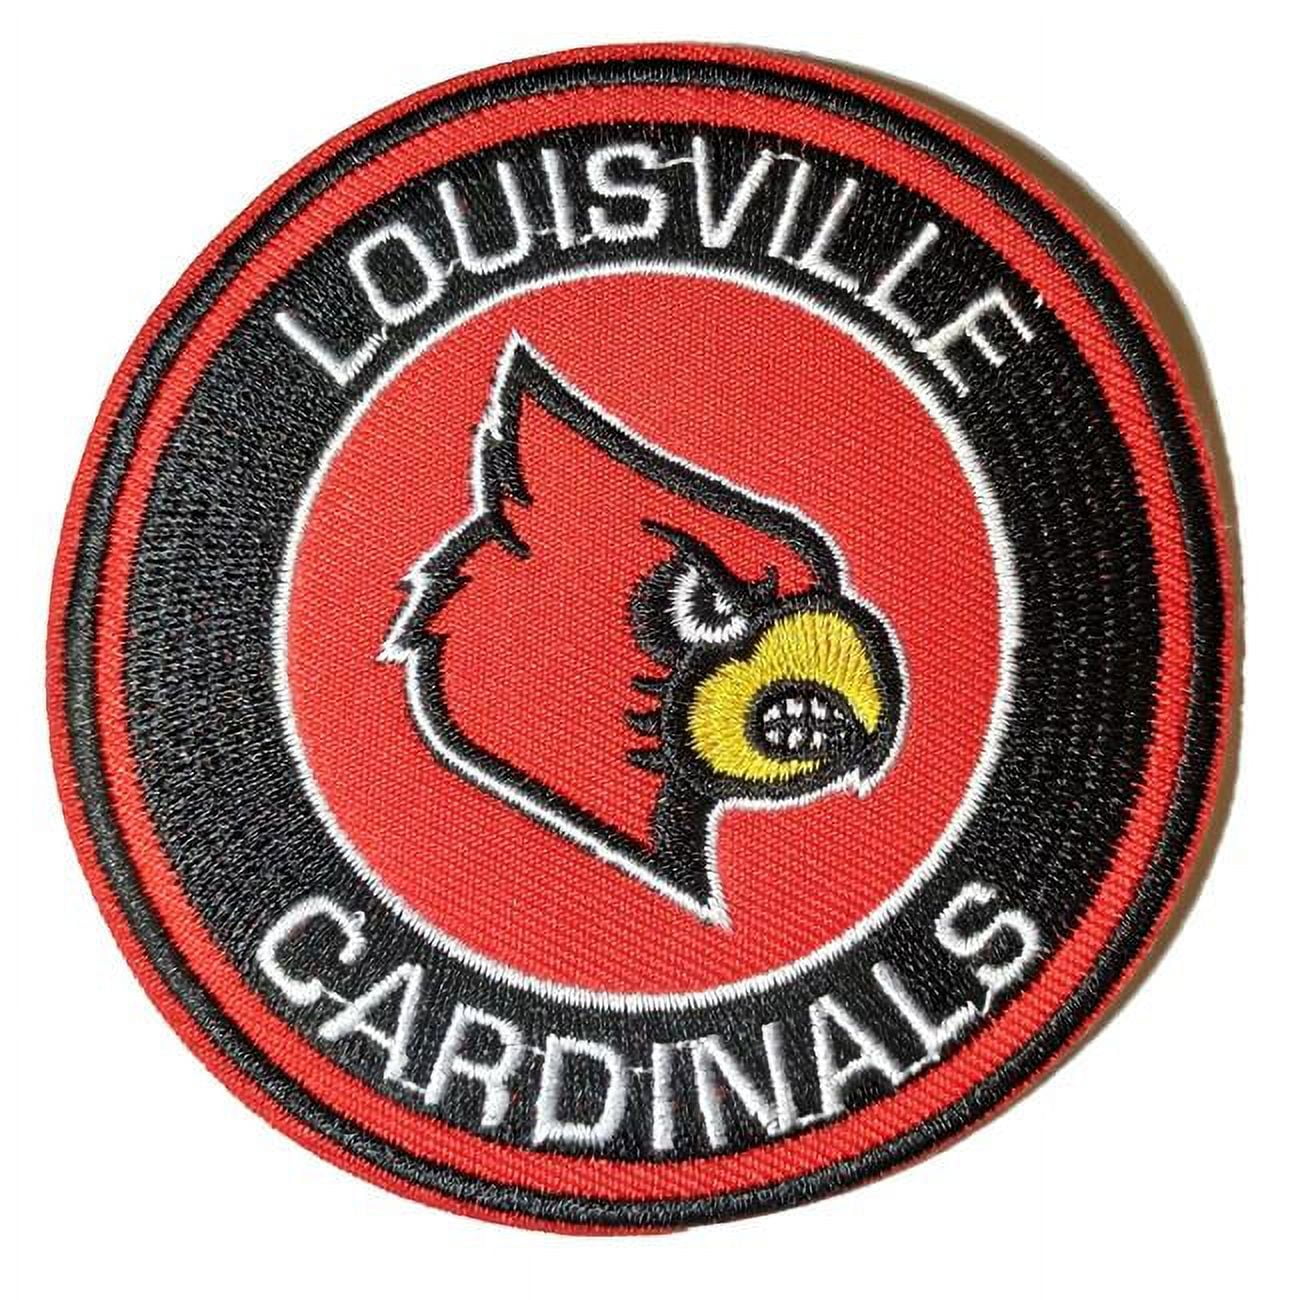 University of Louisville Cardinals Trucker Patch Cap: University of  Louisville